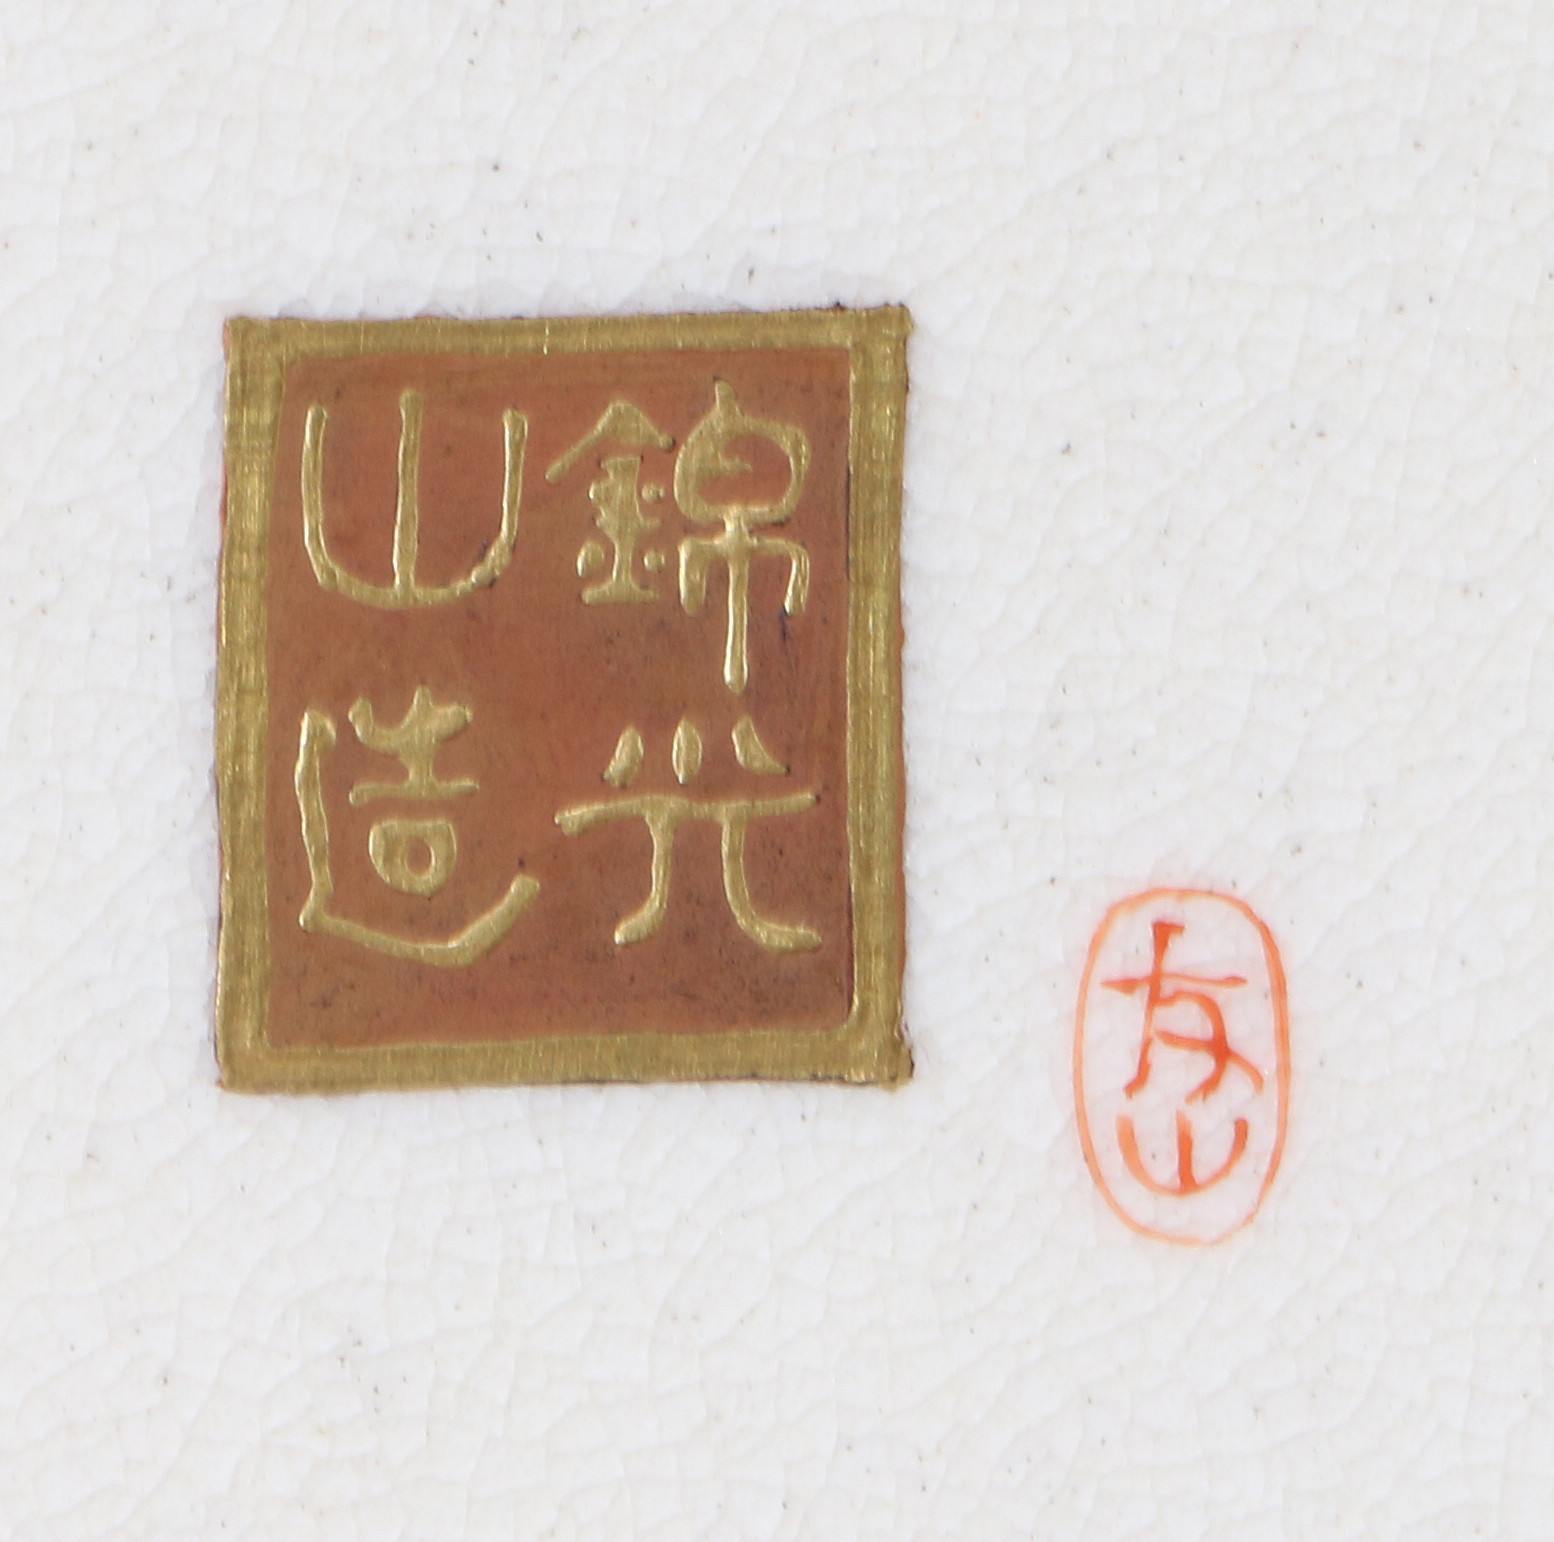 A SATSUMA JAPANESE PORCELAIN BOWL, MEIJI ERA (1868-1912), LATE 19TH/EARLY 20TH CENTURY. - Image 4 of 4